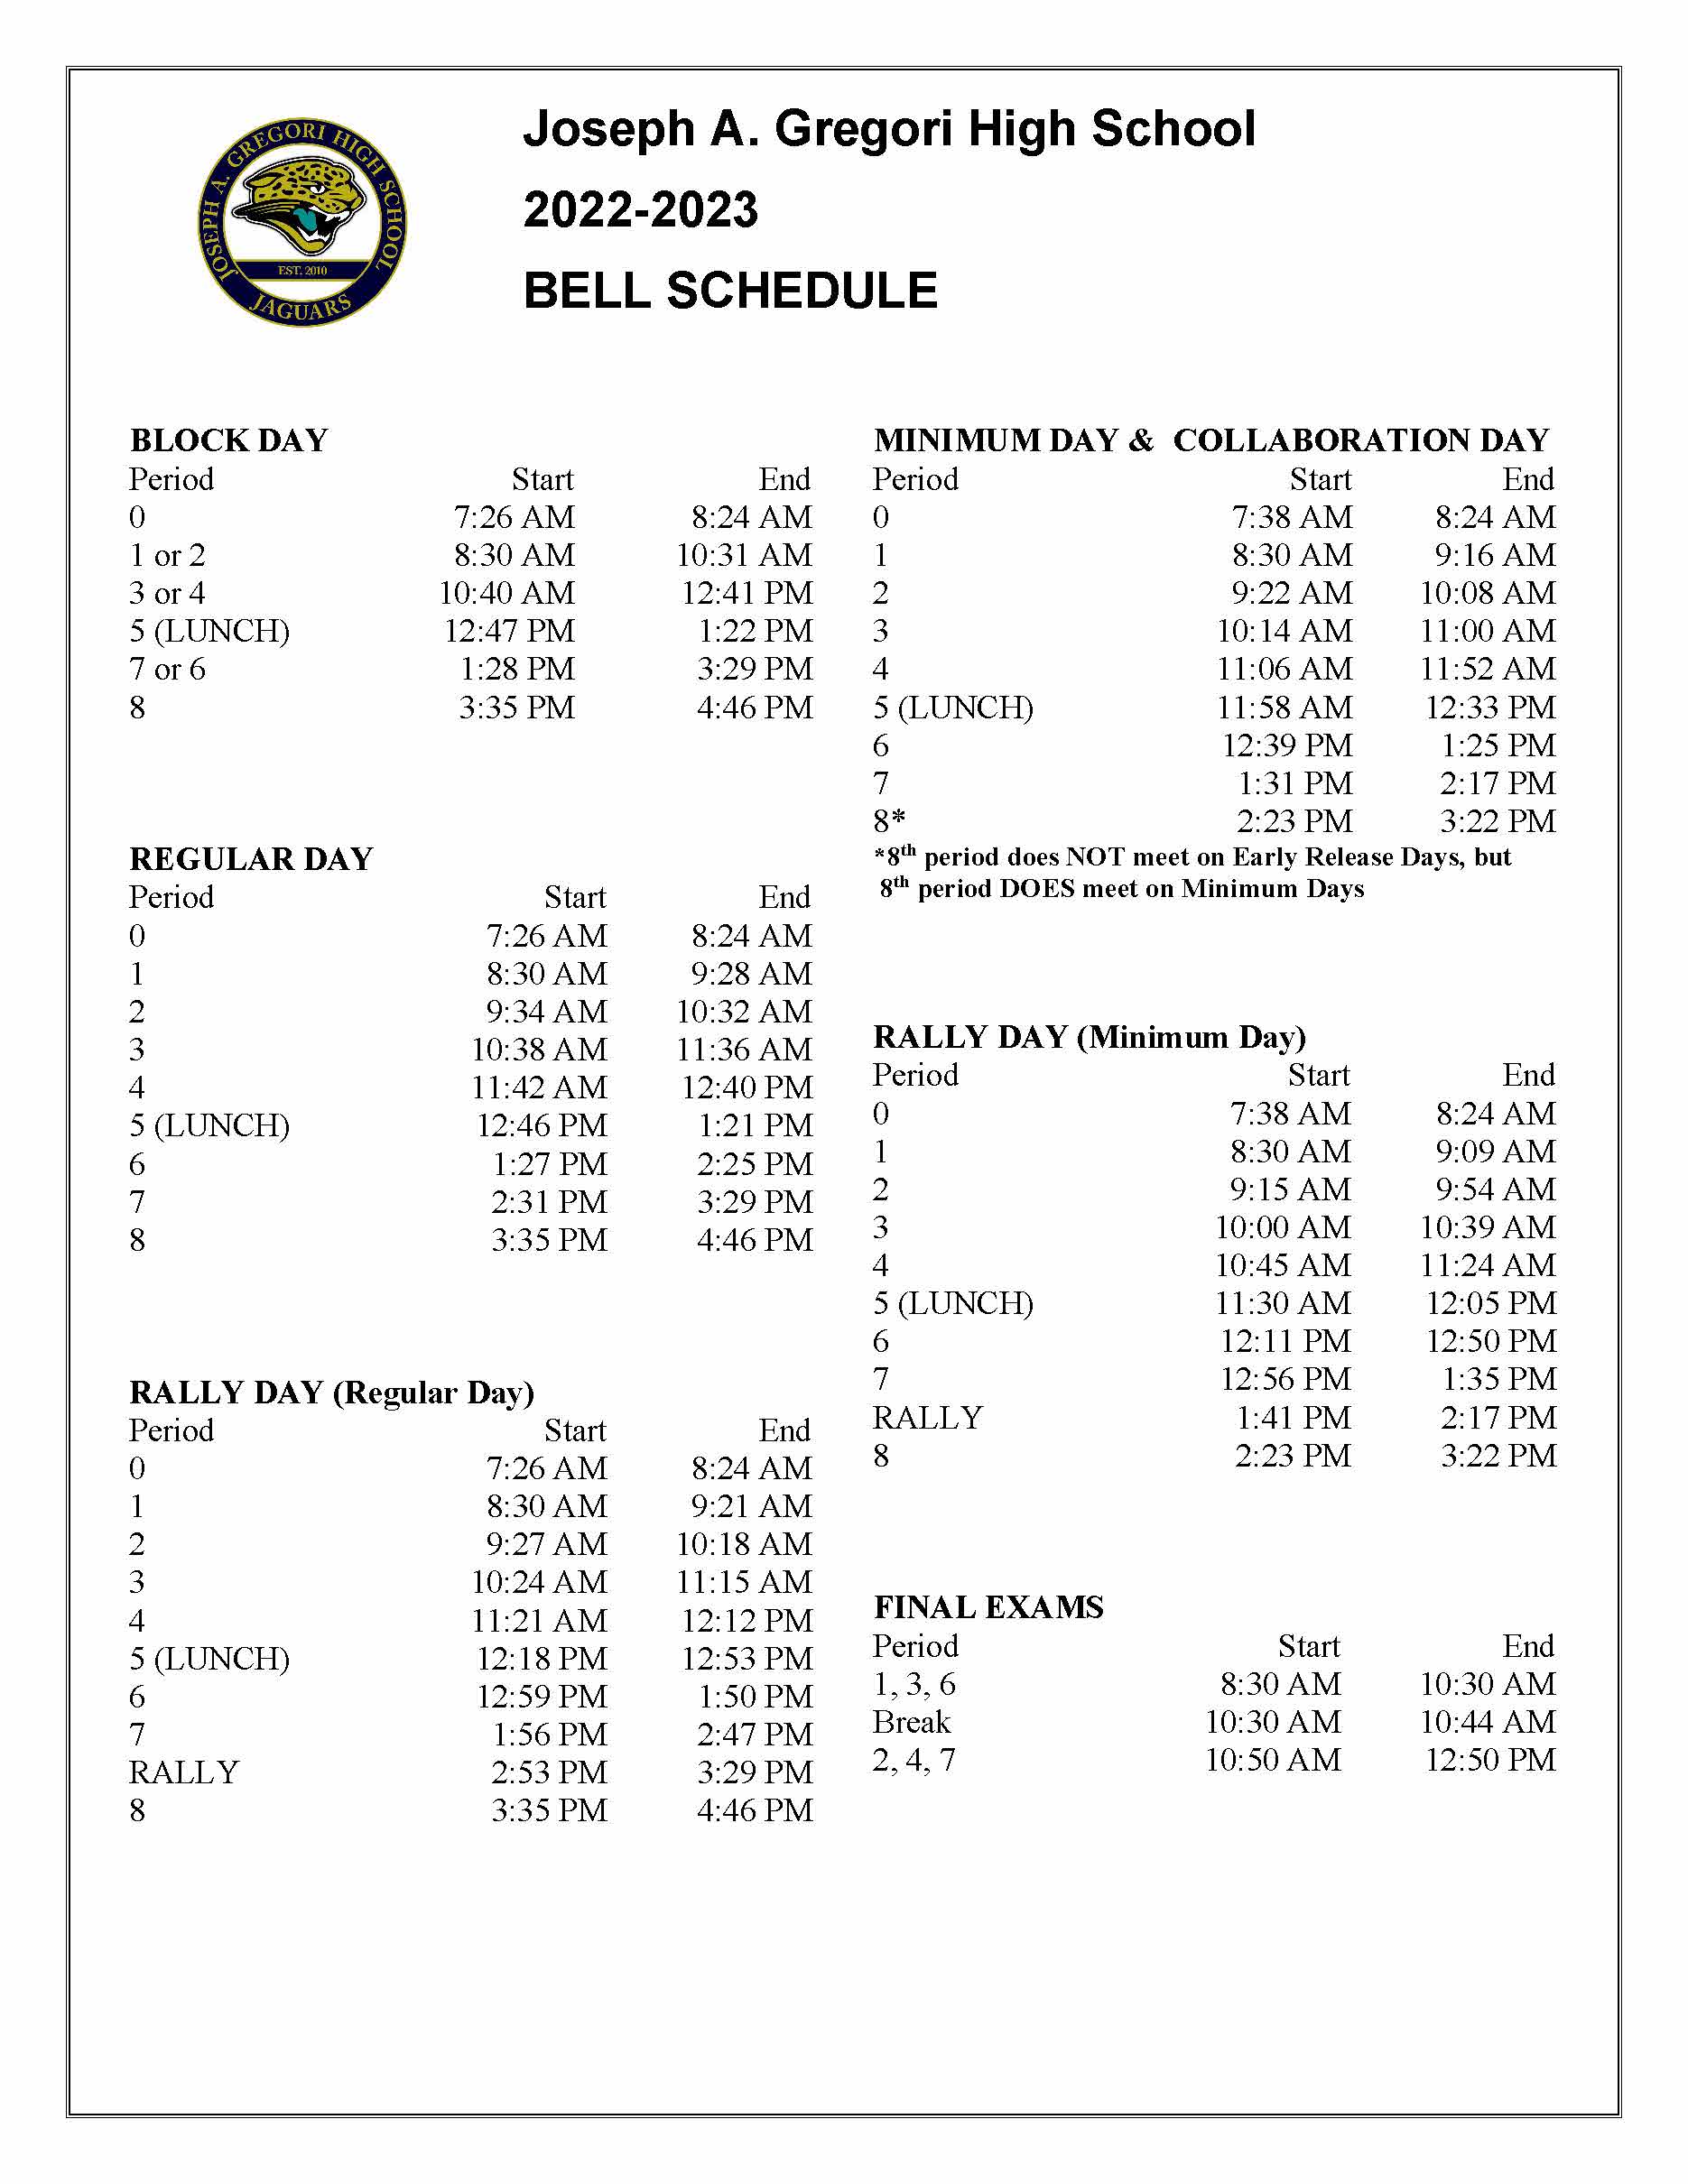 GHS 22-23 Bell Schedule